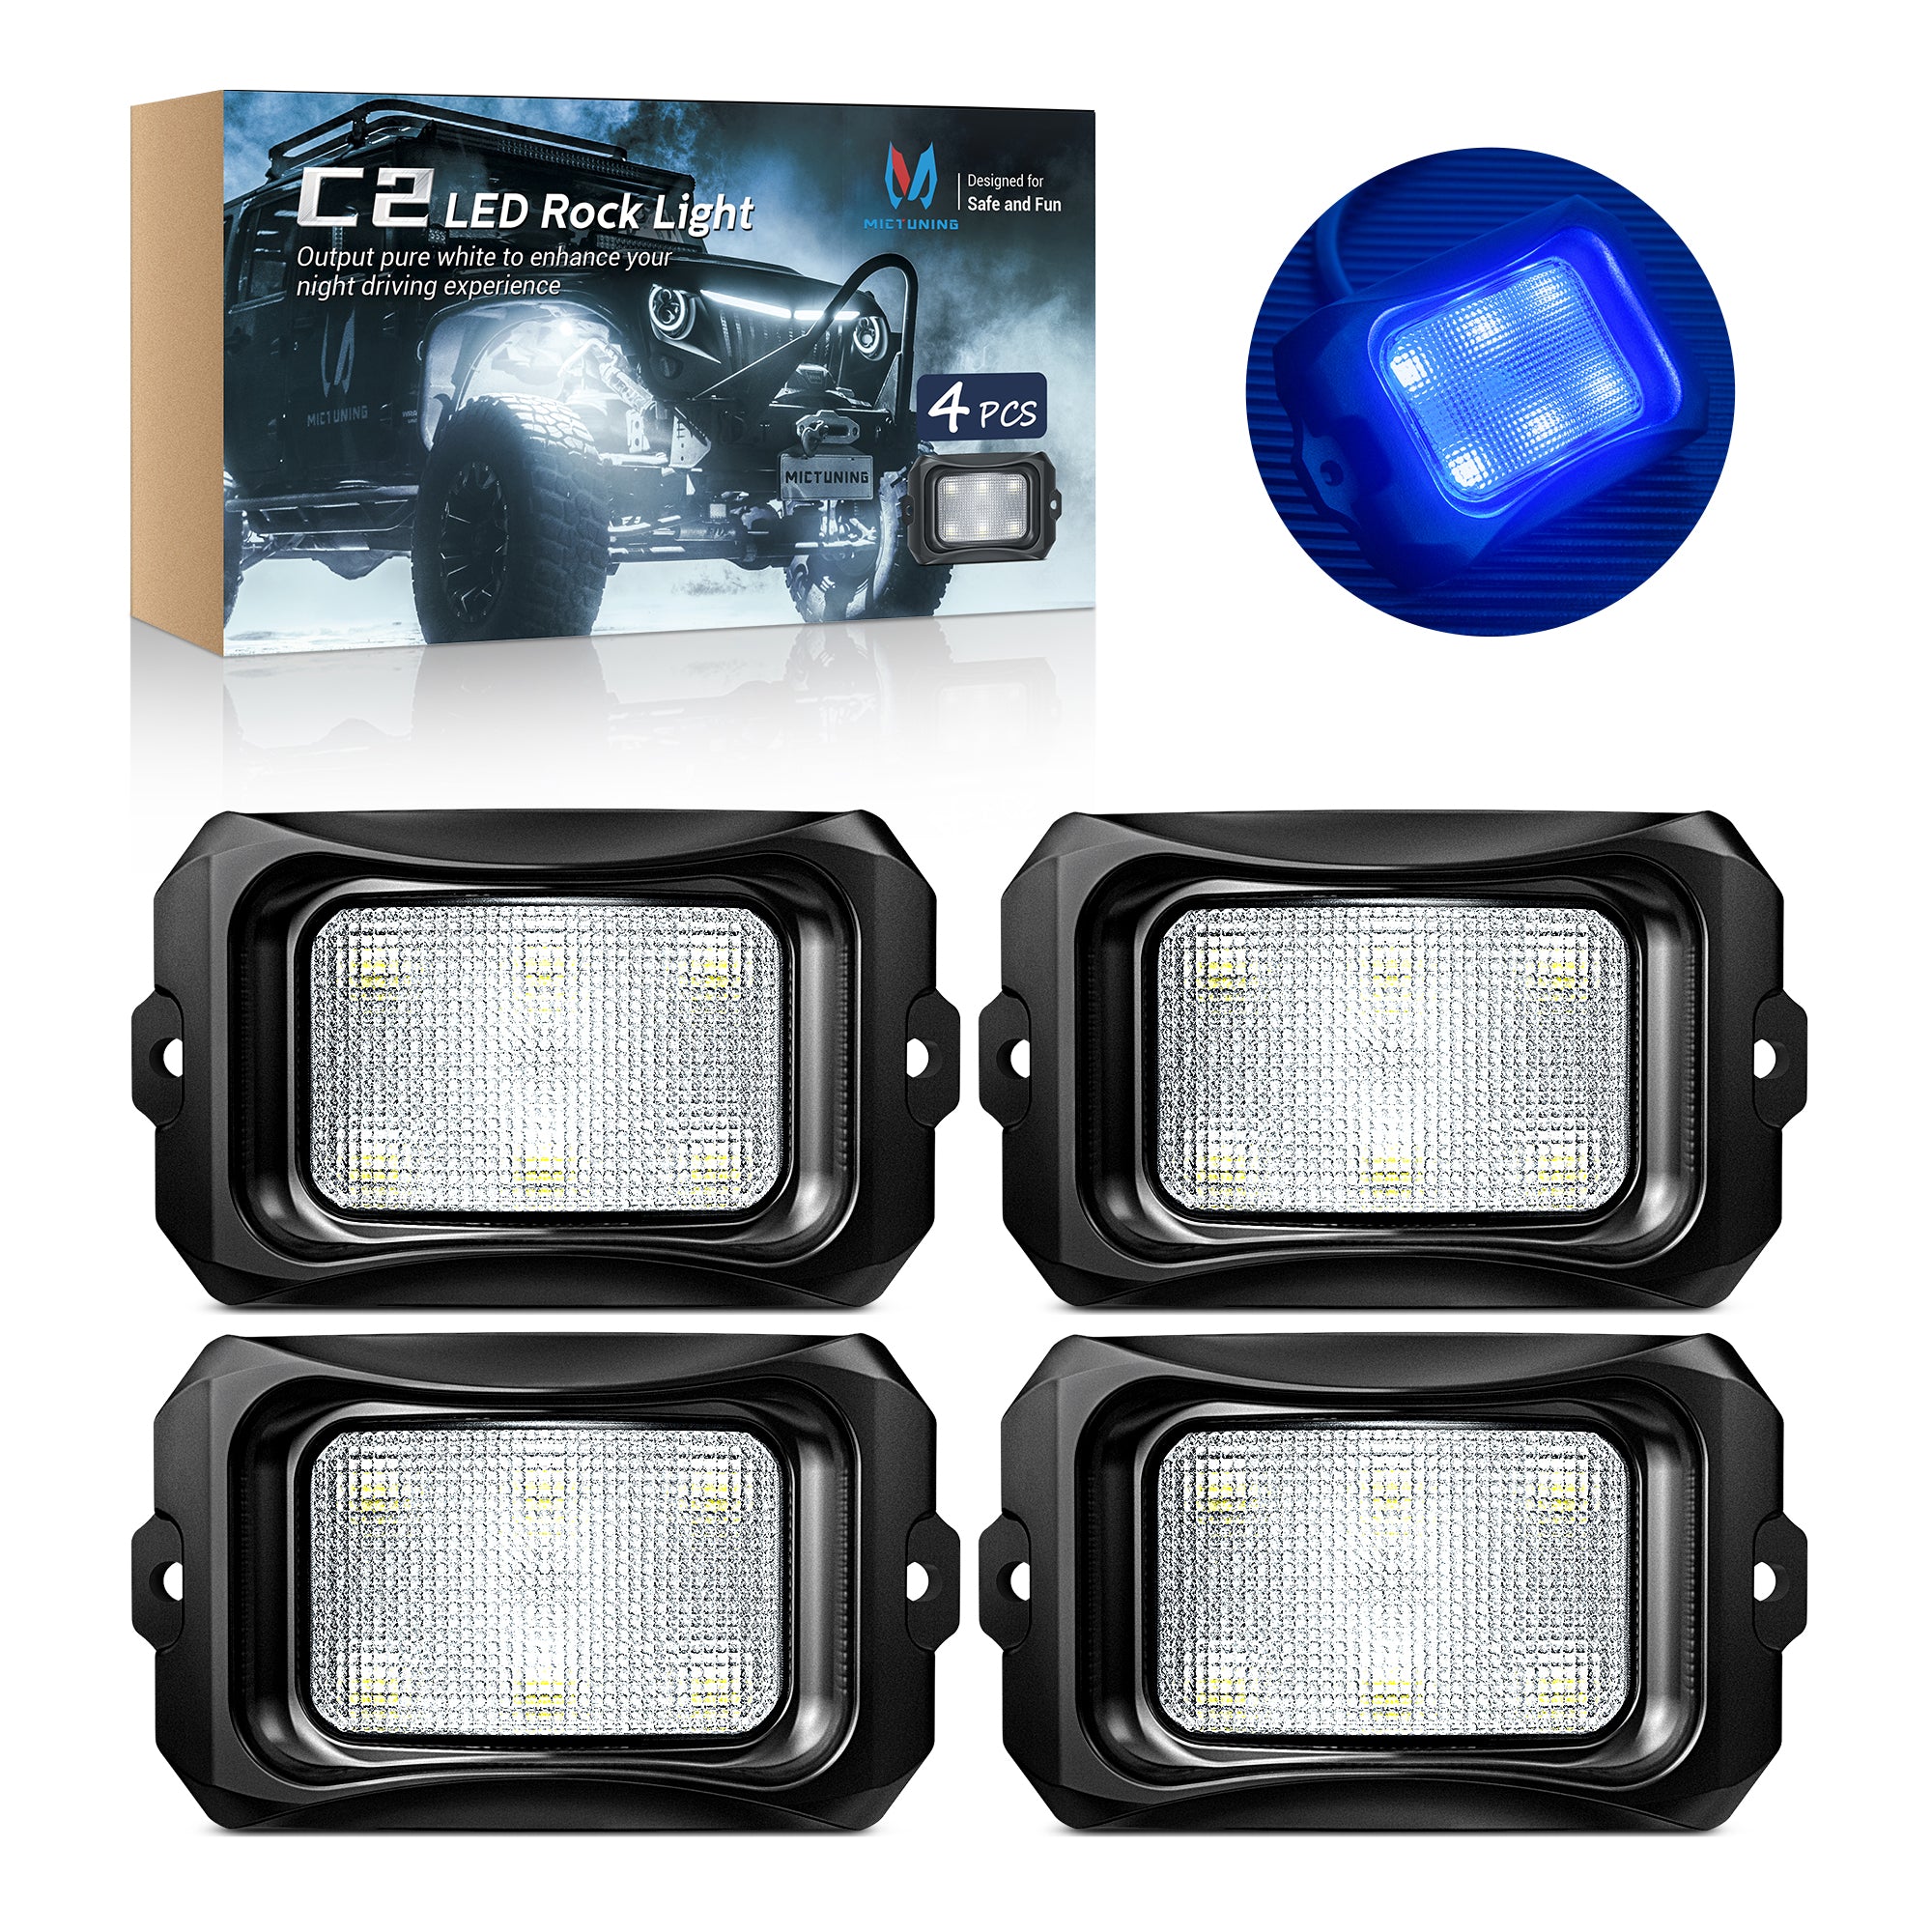 C2 Blue LED Rock Lights, 4 Pods Neon Underglow Light Kits Waterproof Underbody Glow Lamp